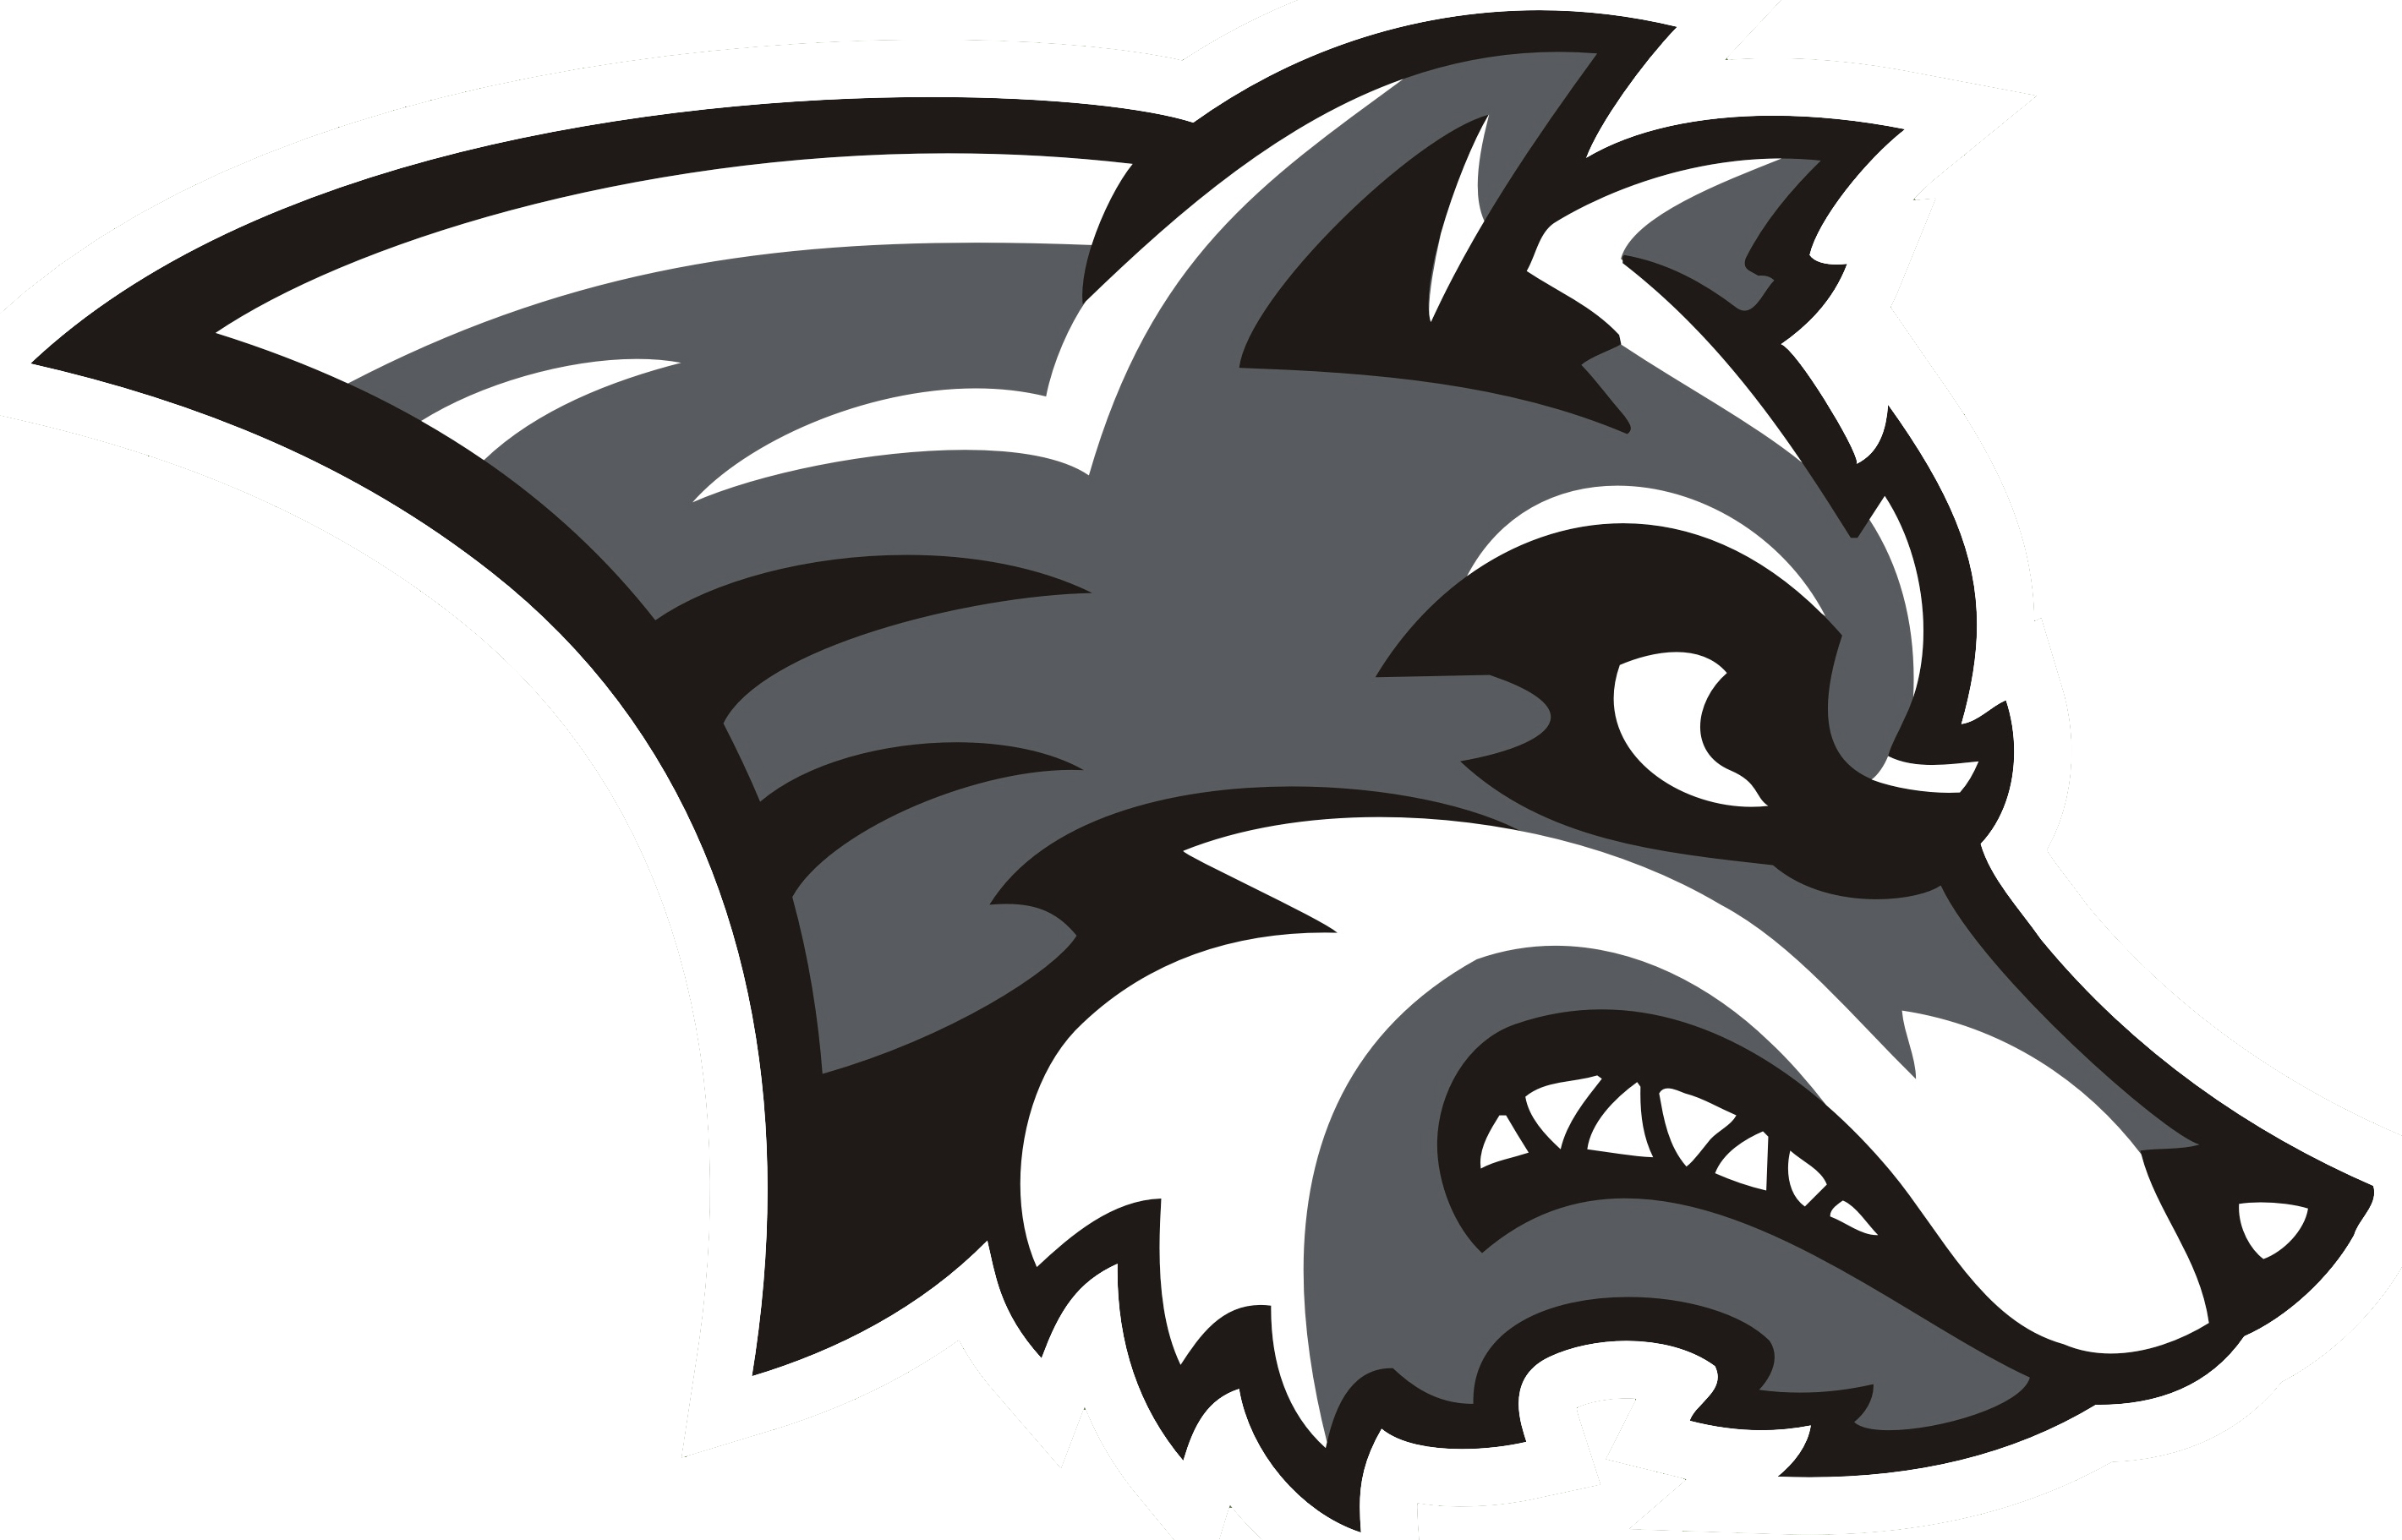 wolf howling logo